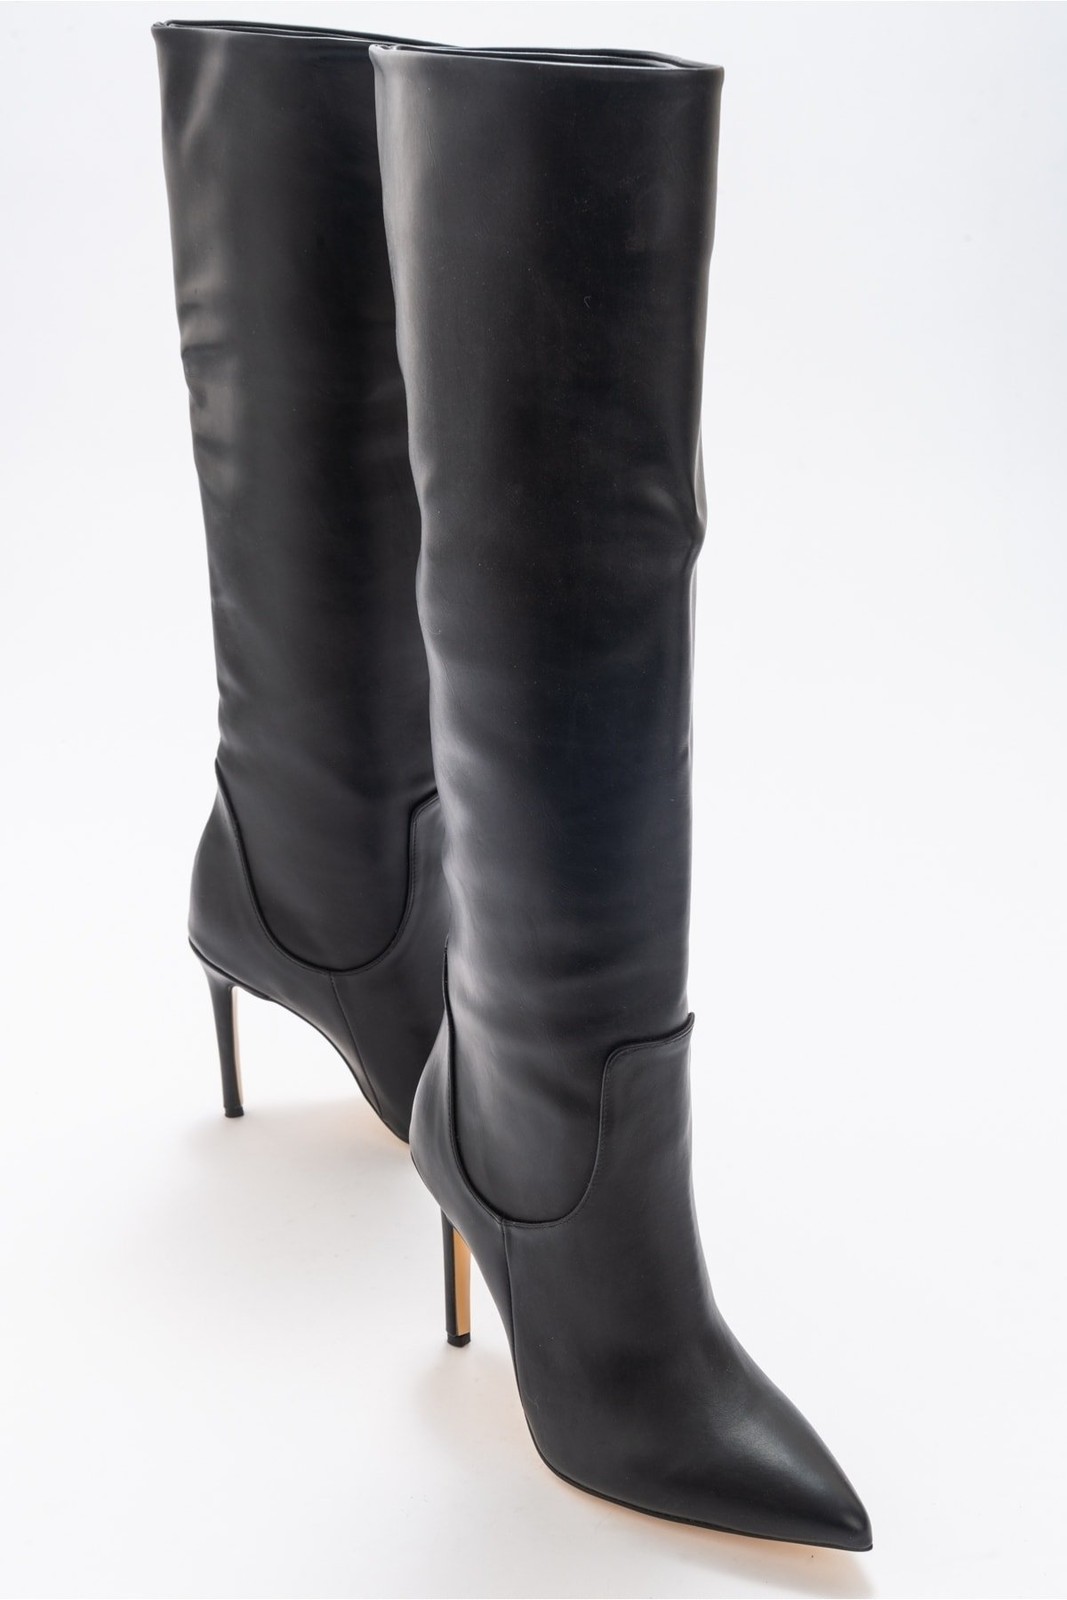 LuviShoes Navy Black Skin Women's Heeled Boots